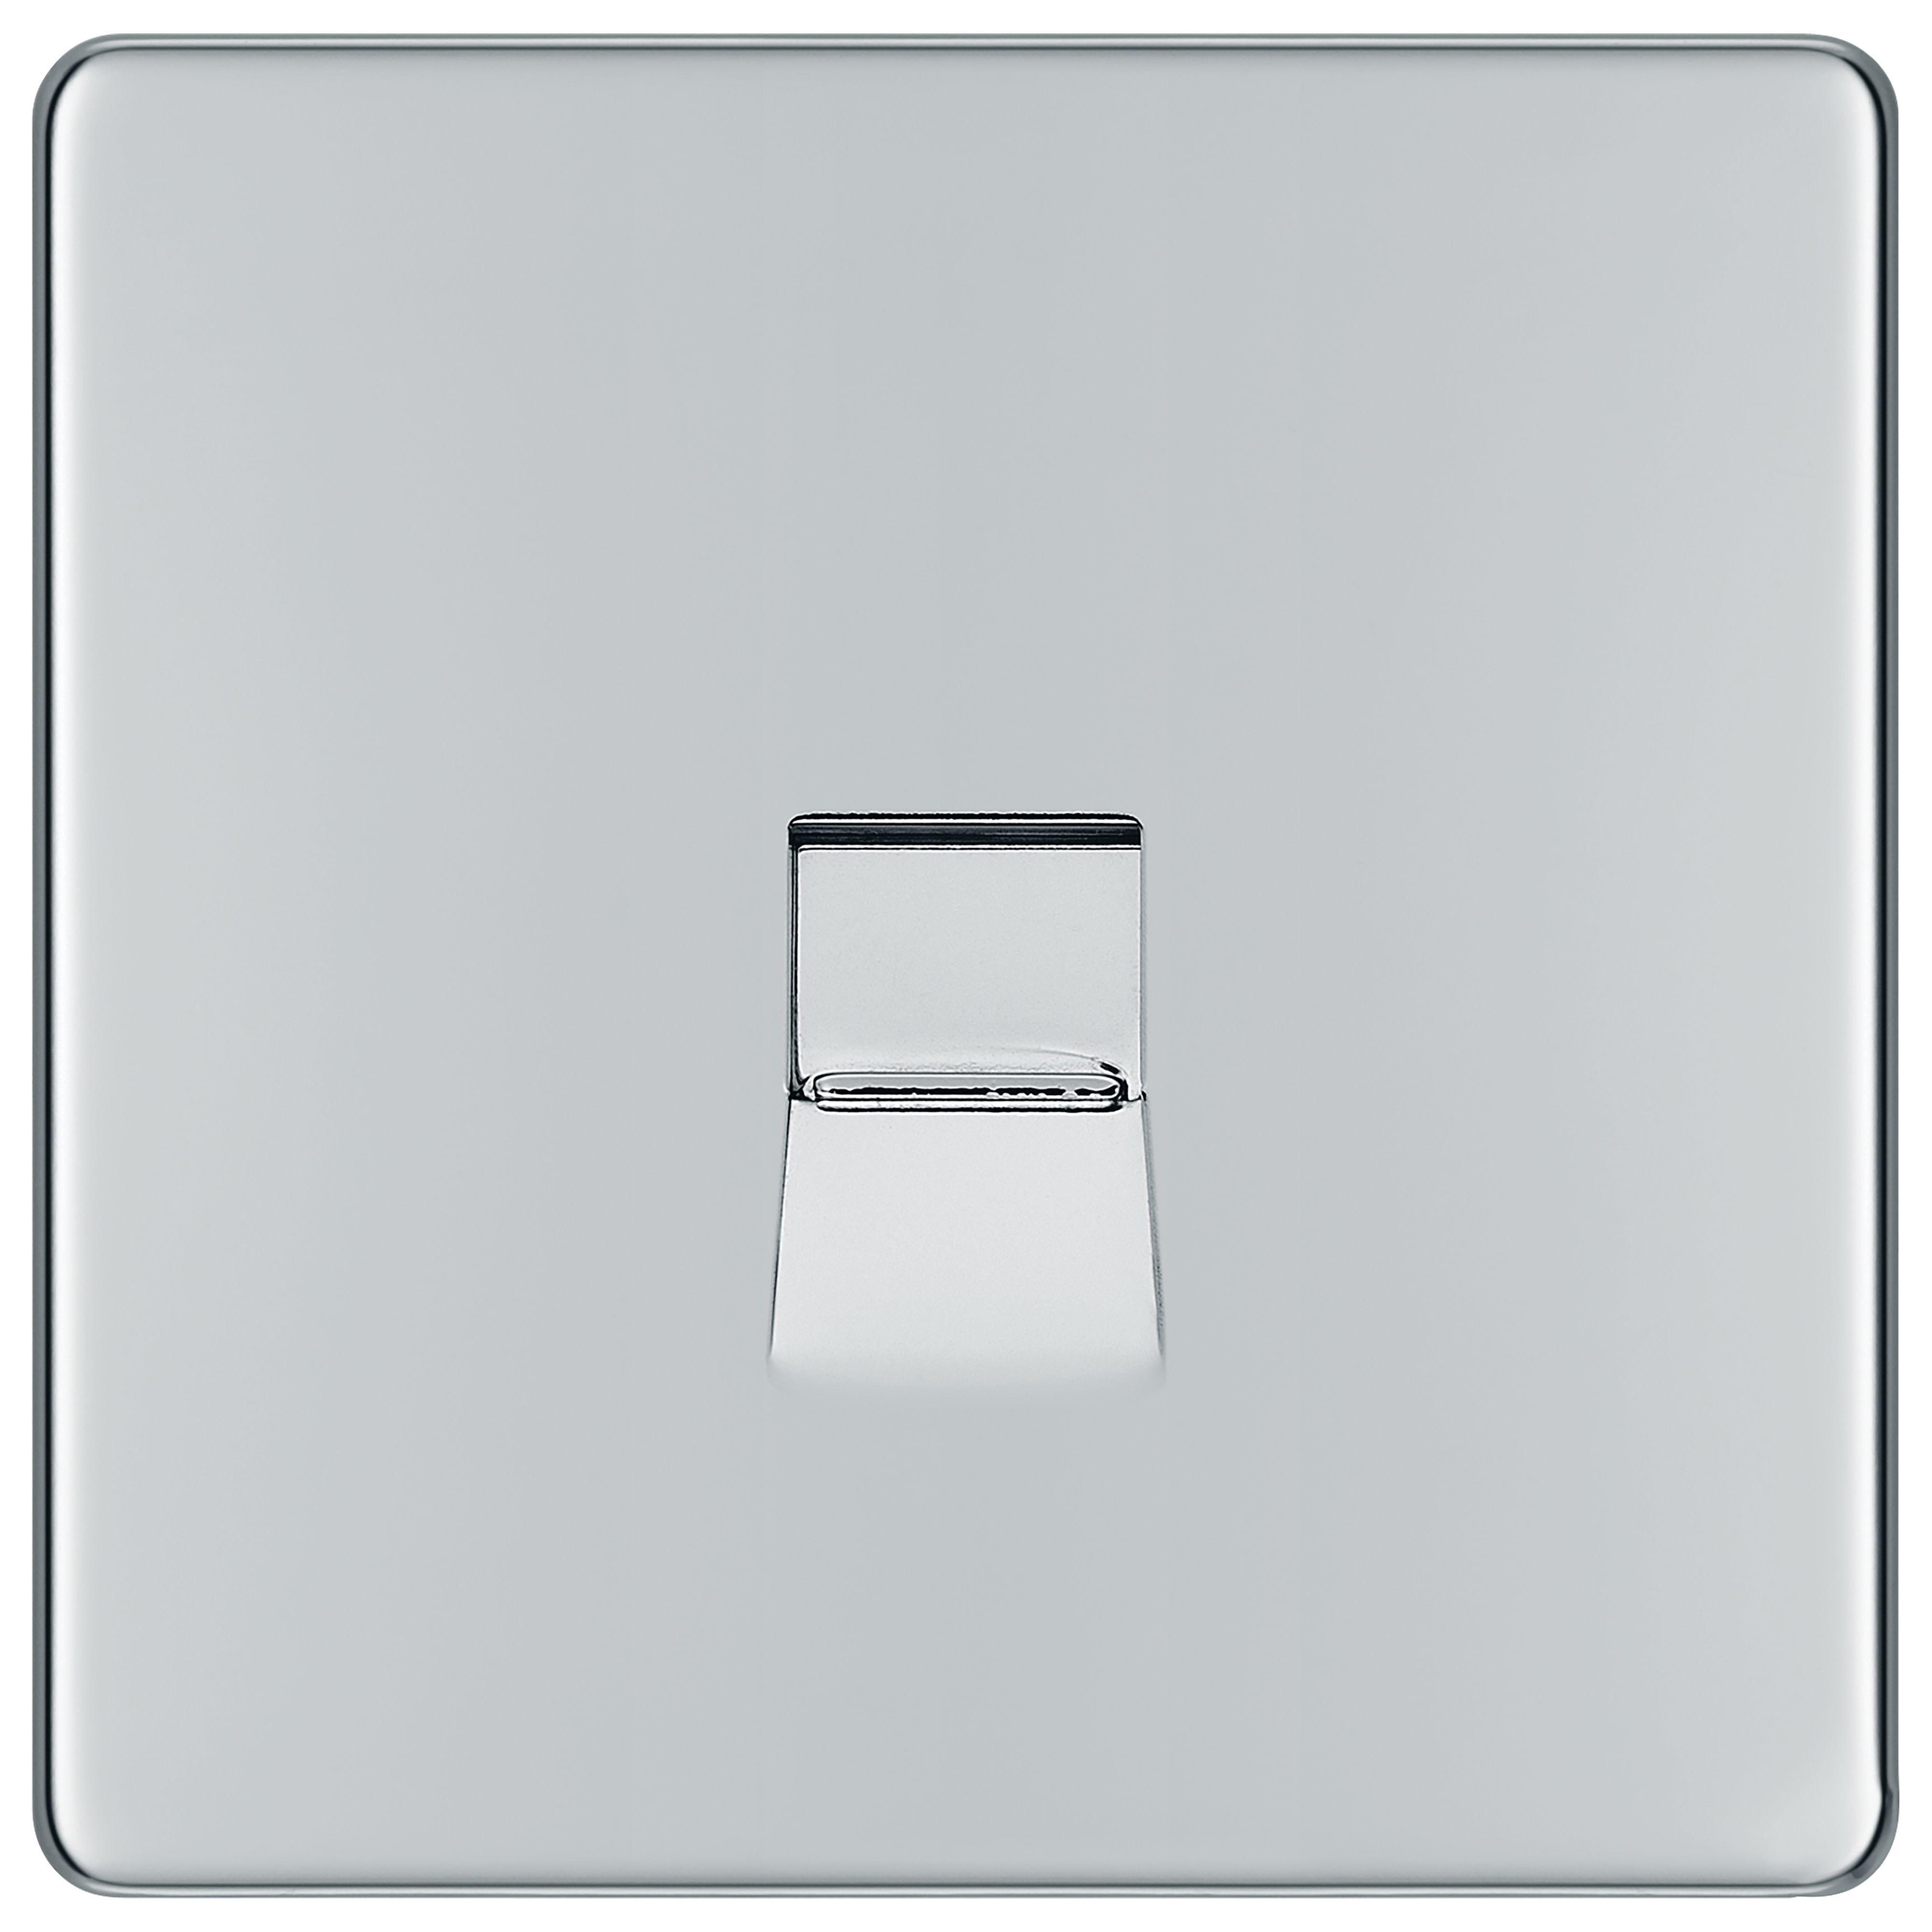 Image of BG Screwless Flat Plate Single Master Telephone Socket, Screw Type - Polished Chrome